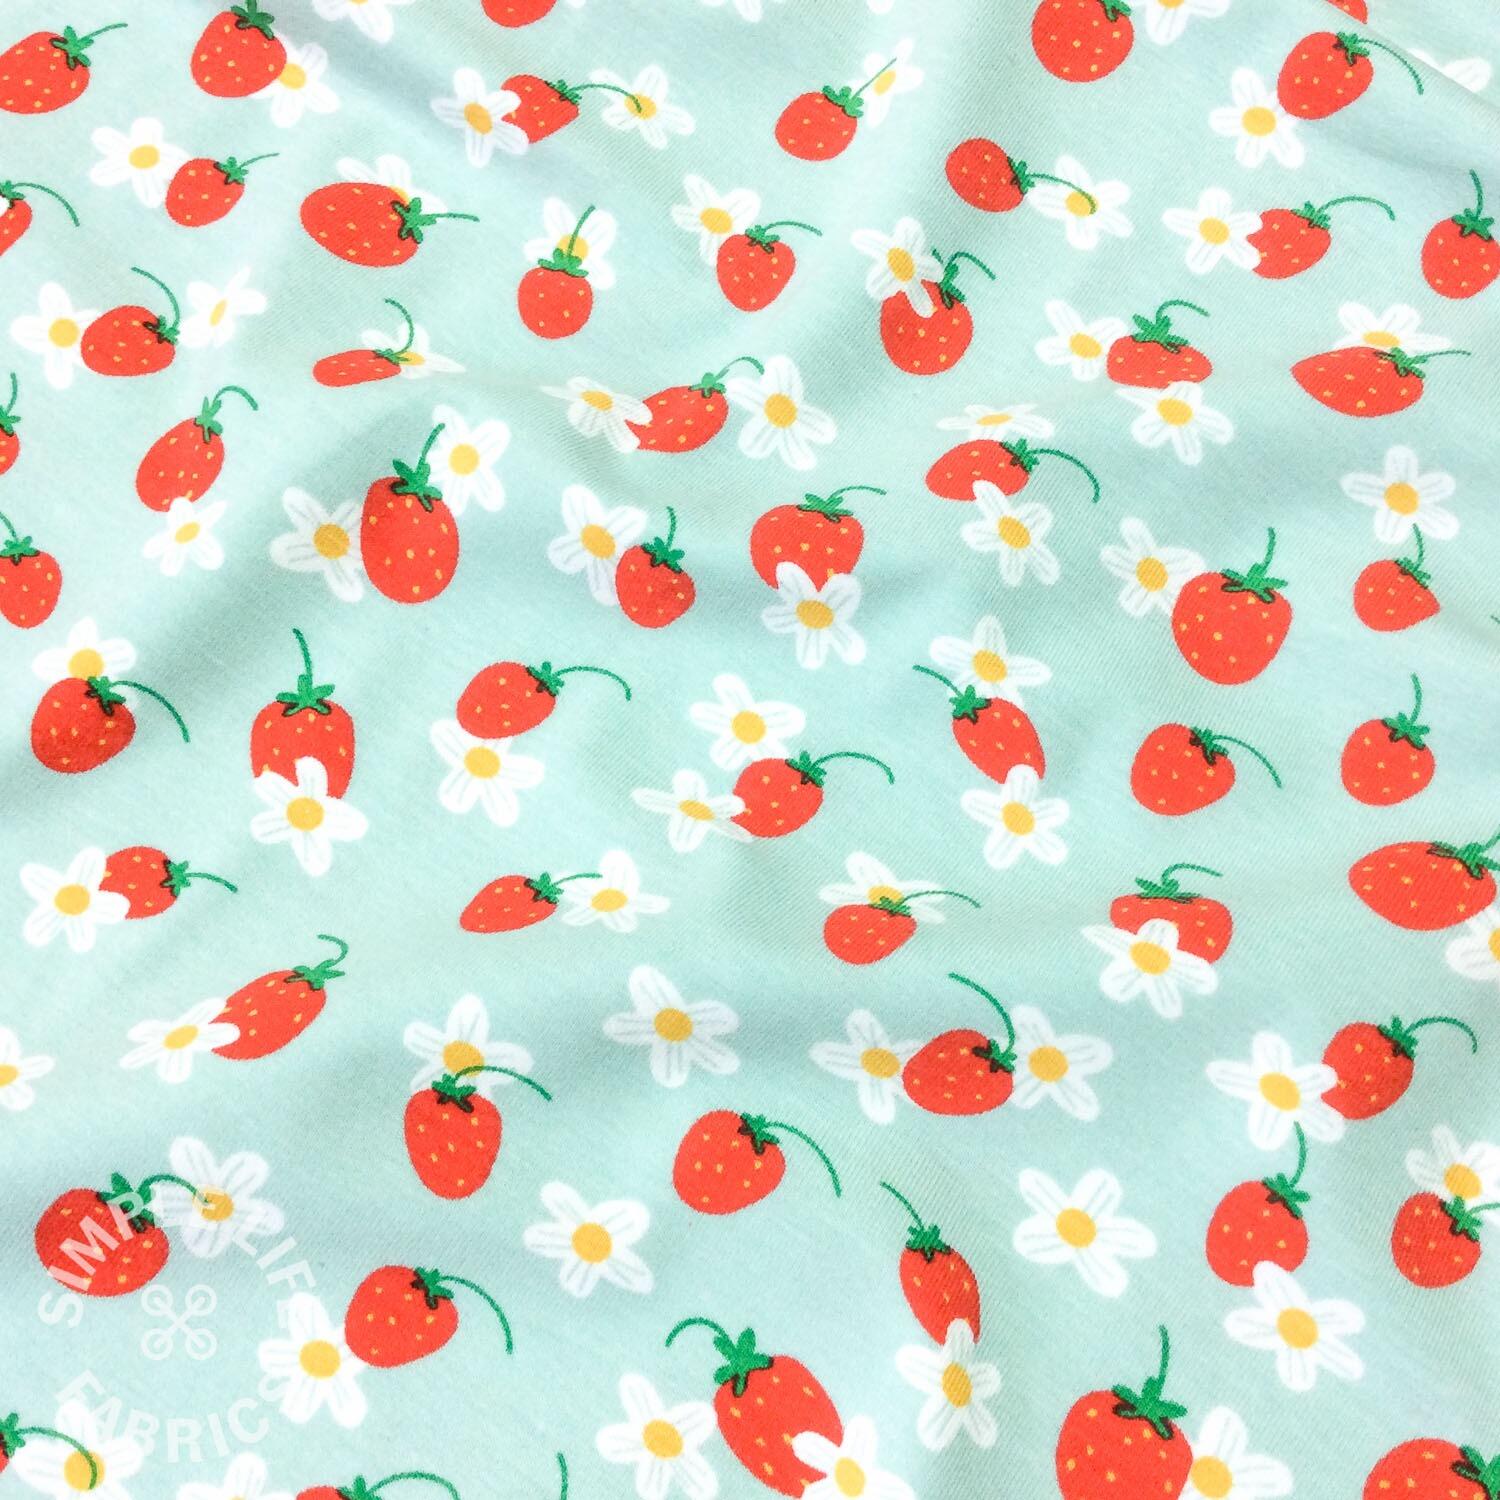 Strawberries fruit jersey fabric